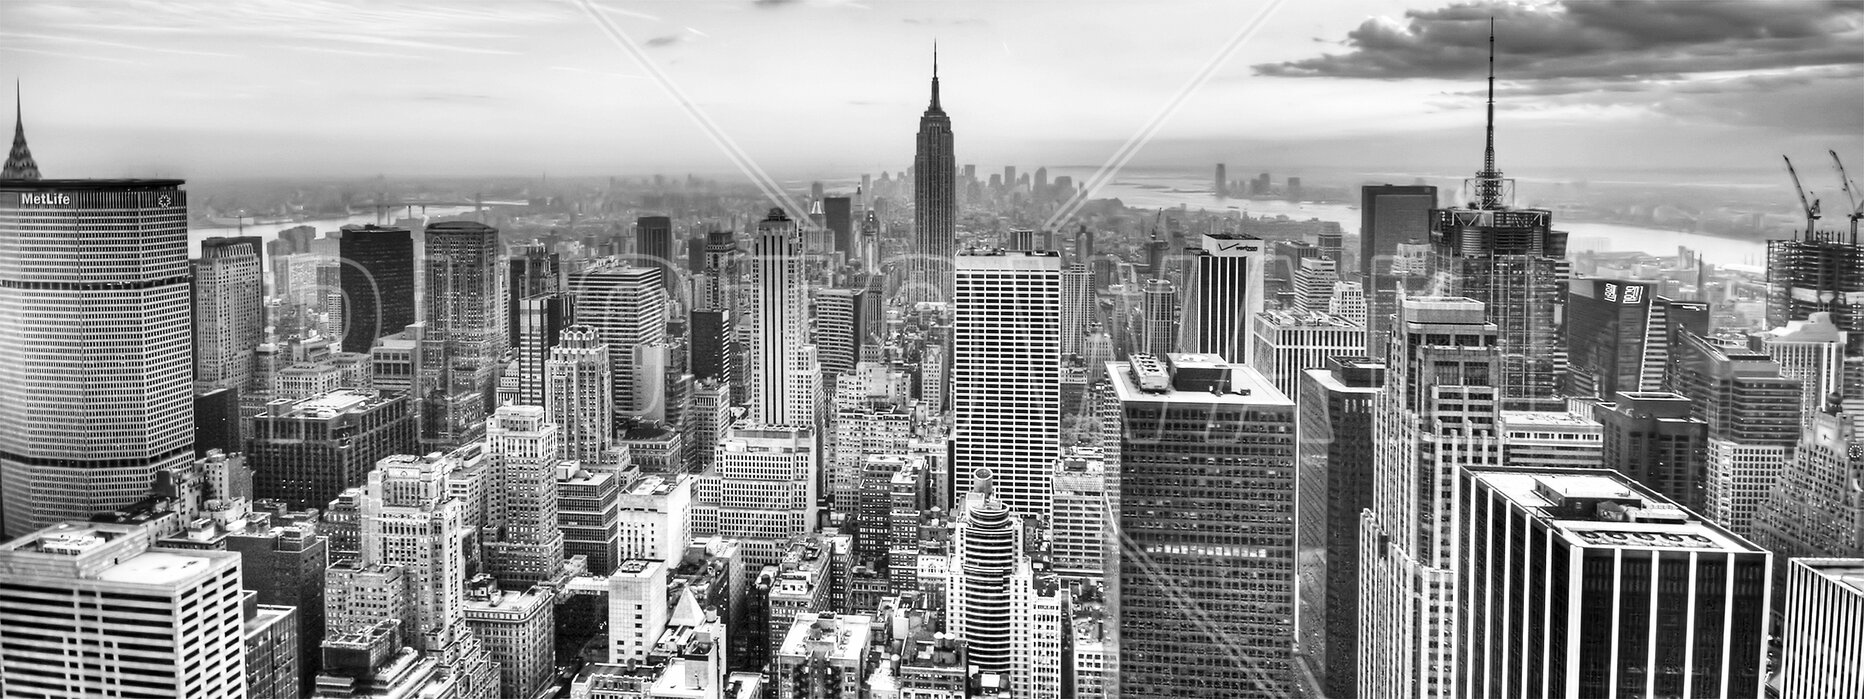 New york city gratte-ciel nuit b/&w toile wall art panorama encadrée imprimer